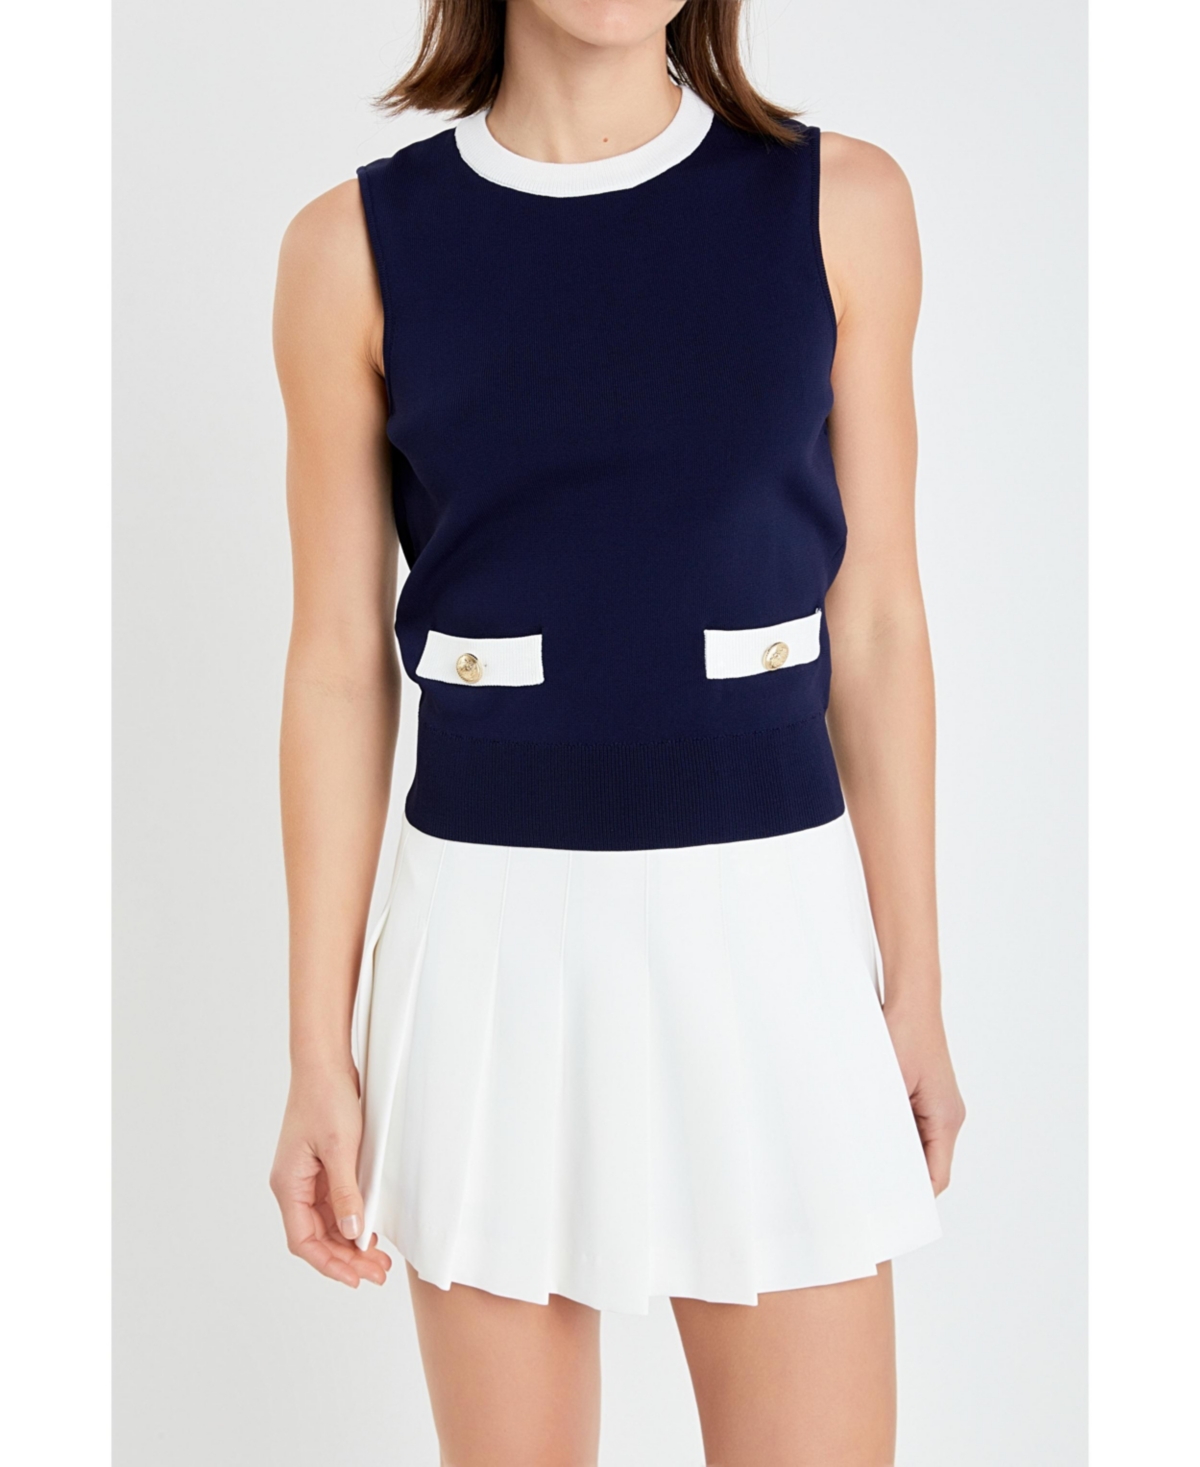 Women's Colorblock Sleeveless Knit Top - Navy/white